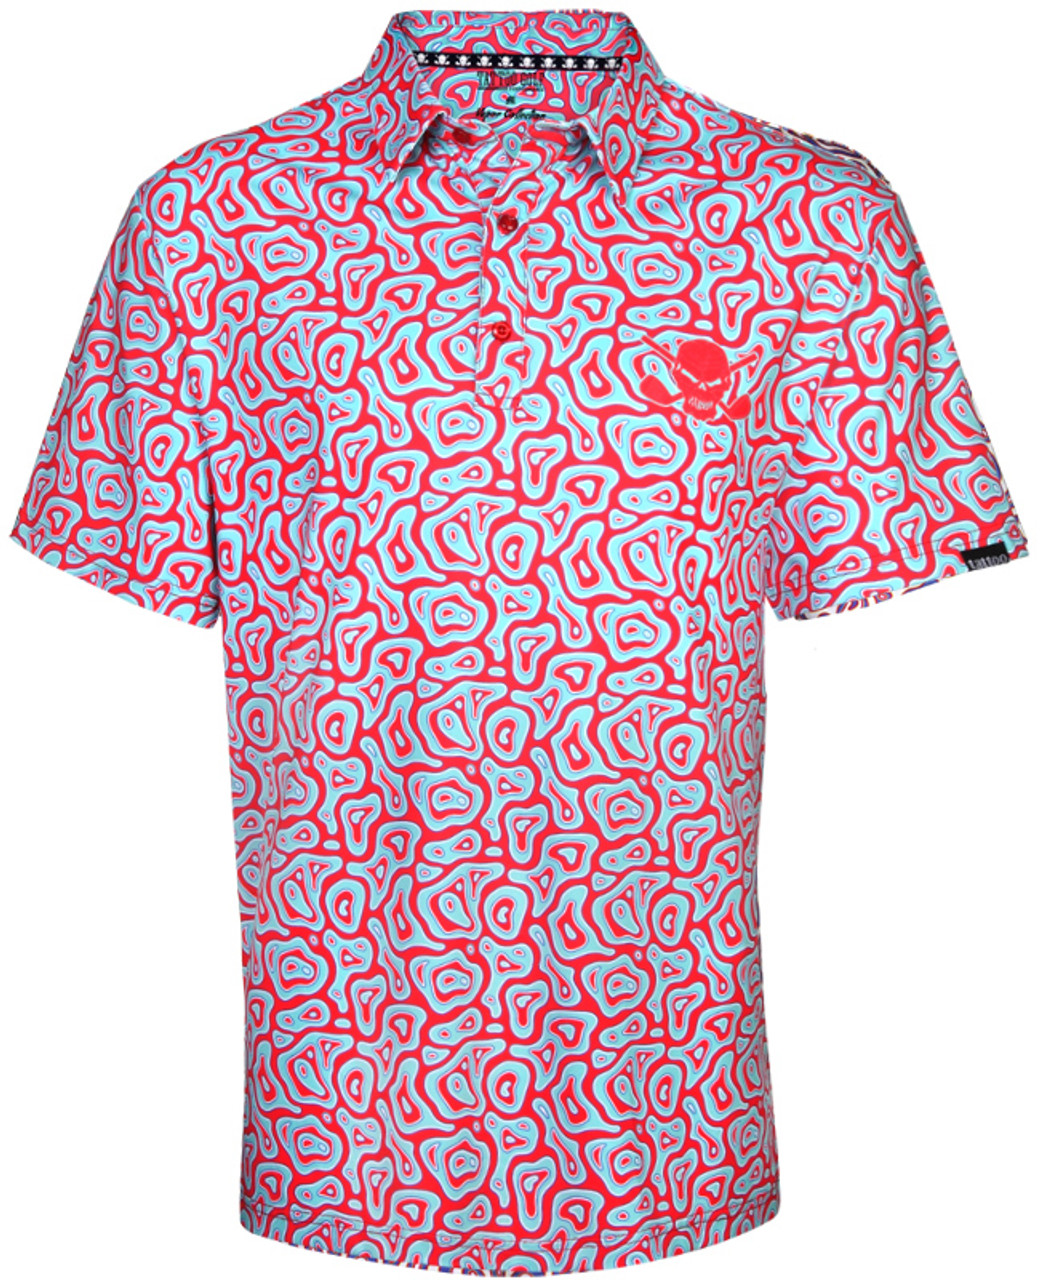 Vapor graphic print red golf shirt Men's Golf Polo (red shirt) Wild Golf  Shirts with skulls